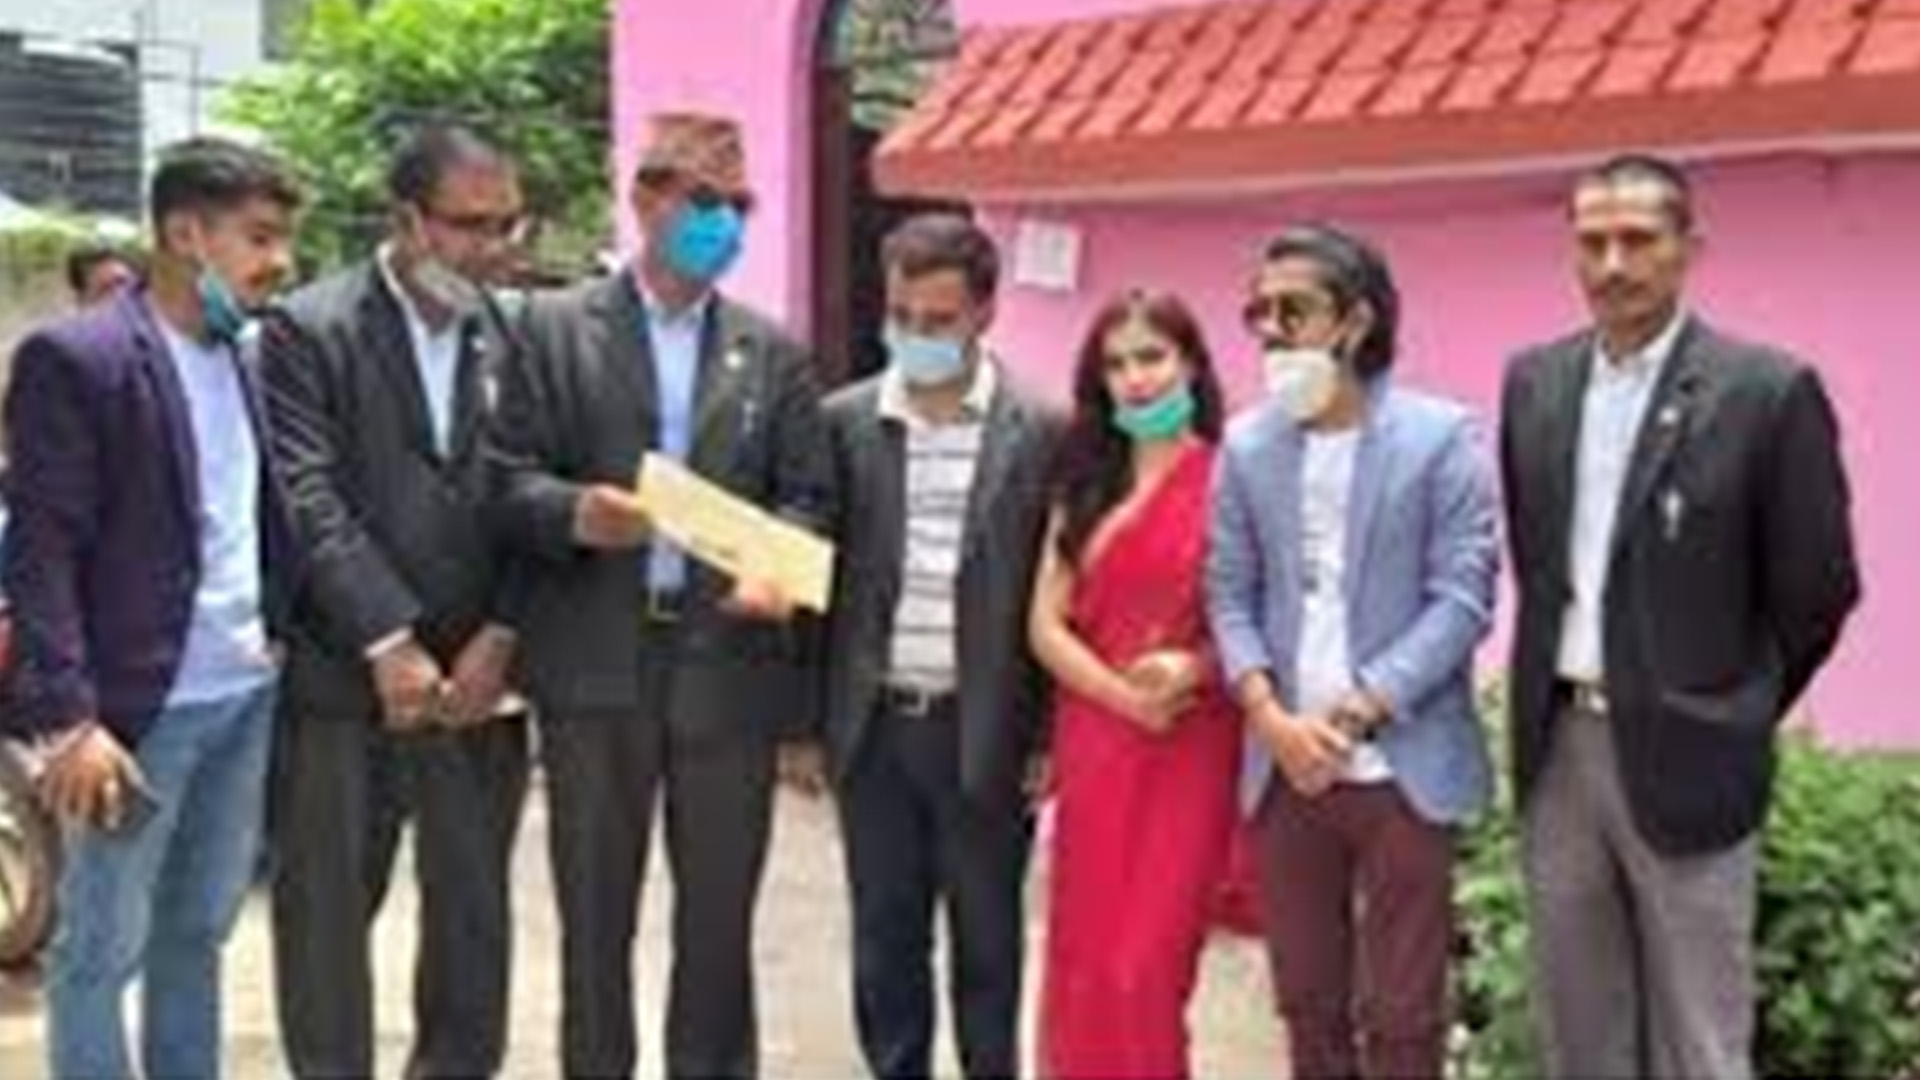 Popular singer Nishan Bhattarai Court Marries his girlfriend